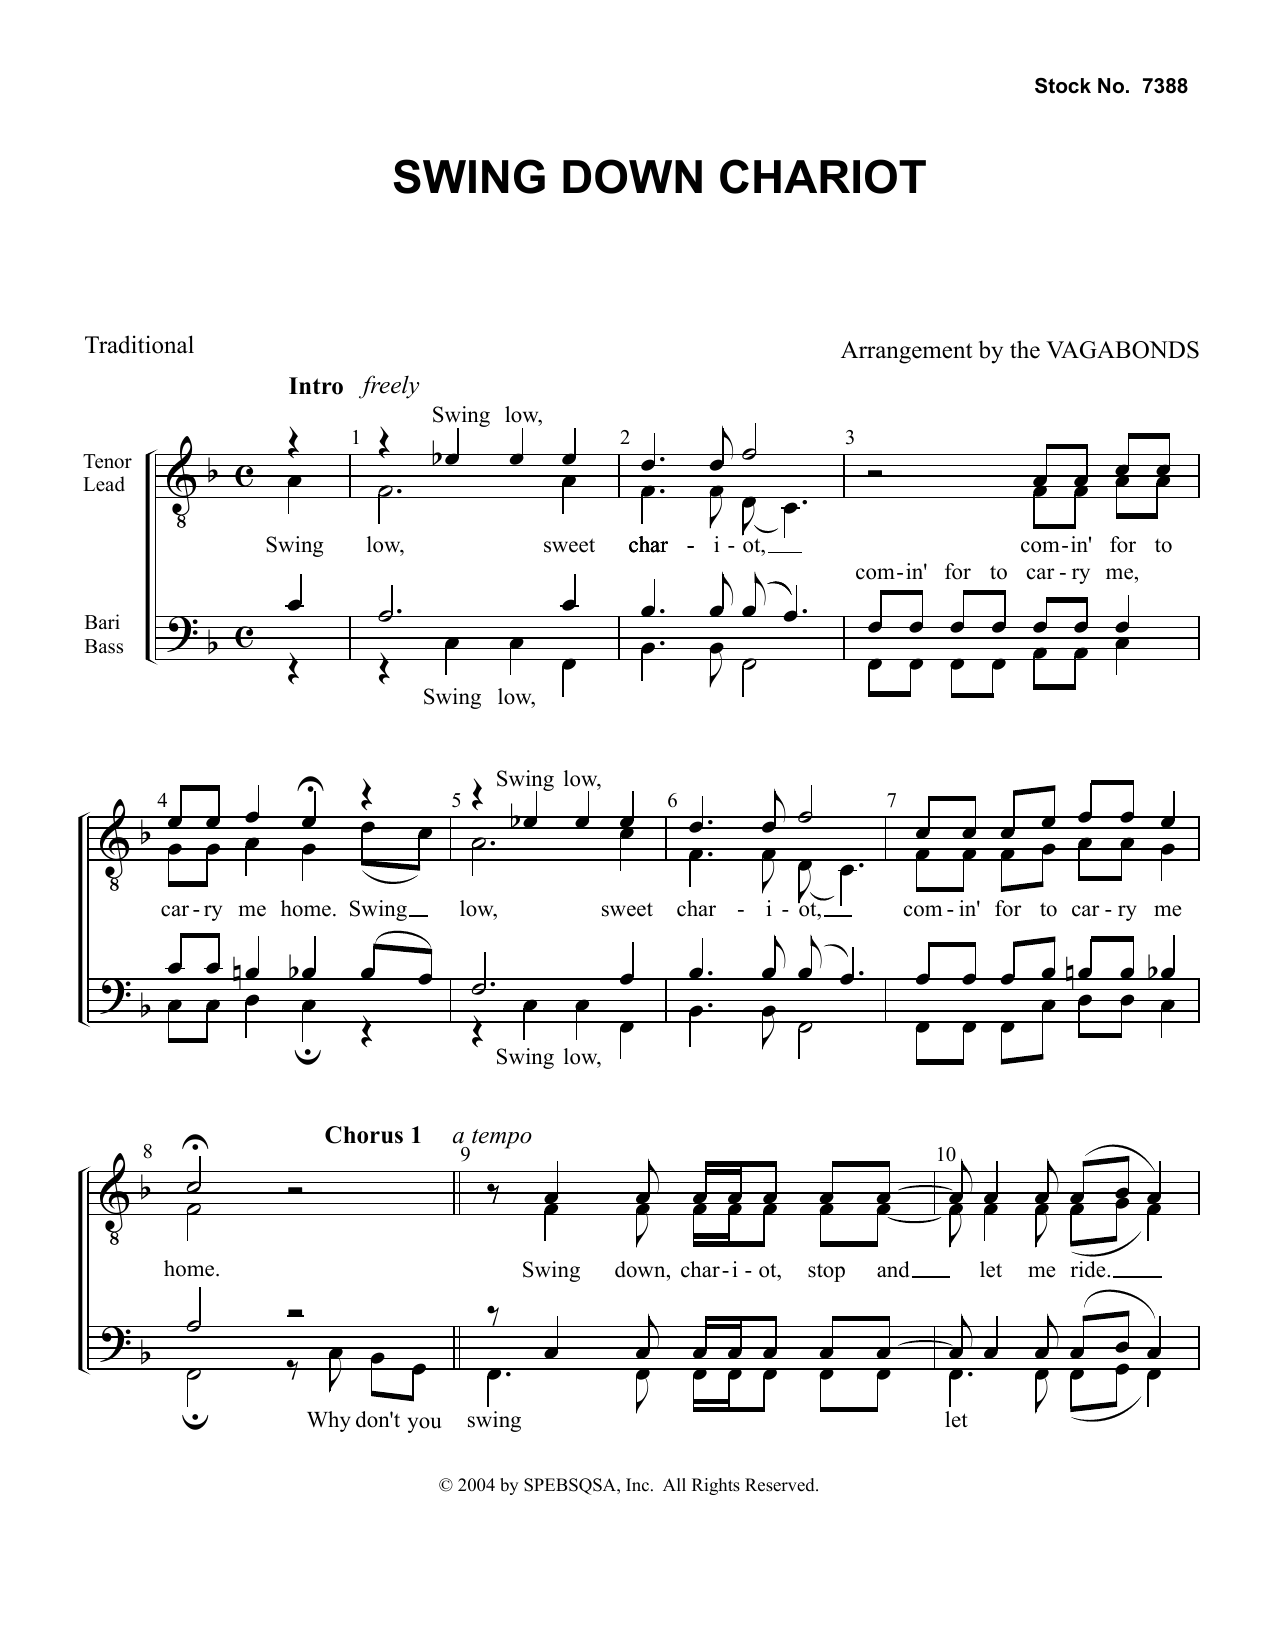 The Vagabonds Swing Down Chariot (arr. The Vagabonds) Sheet Music Notes & Chords for TTBB Choir - Download or Print PDF